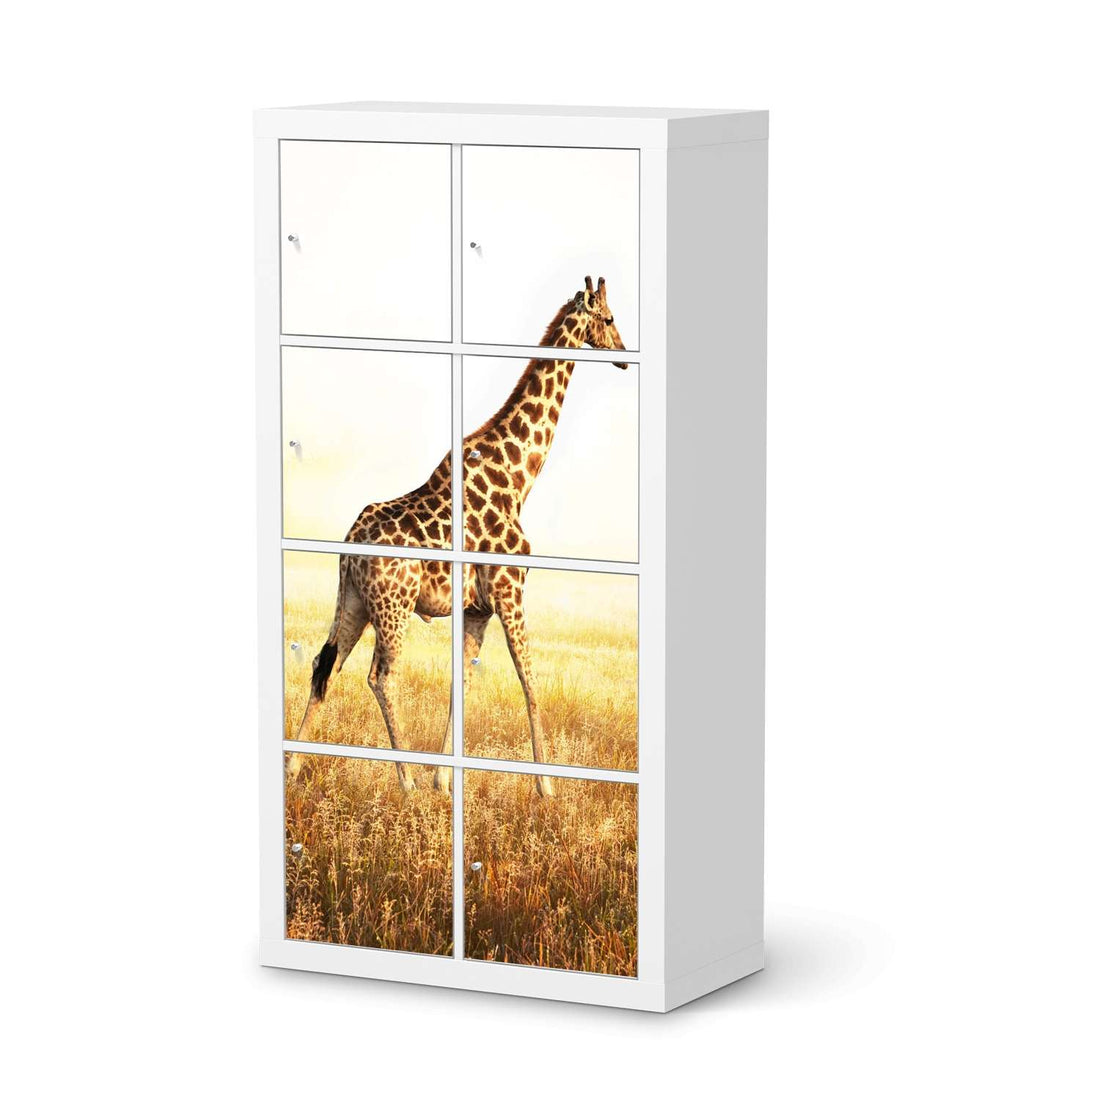 Folie für Möbel Savanna Giraffe - IKEA Kallax Regal 8 Türen  - weiss